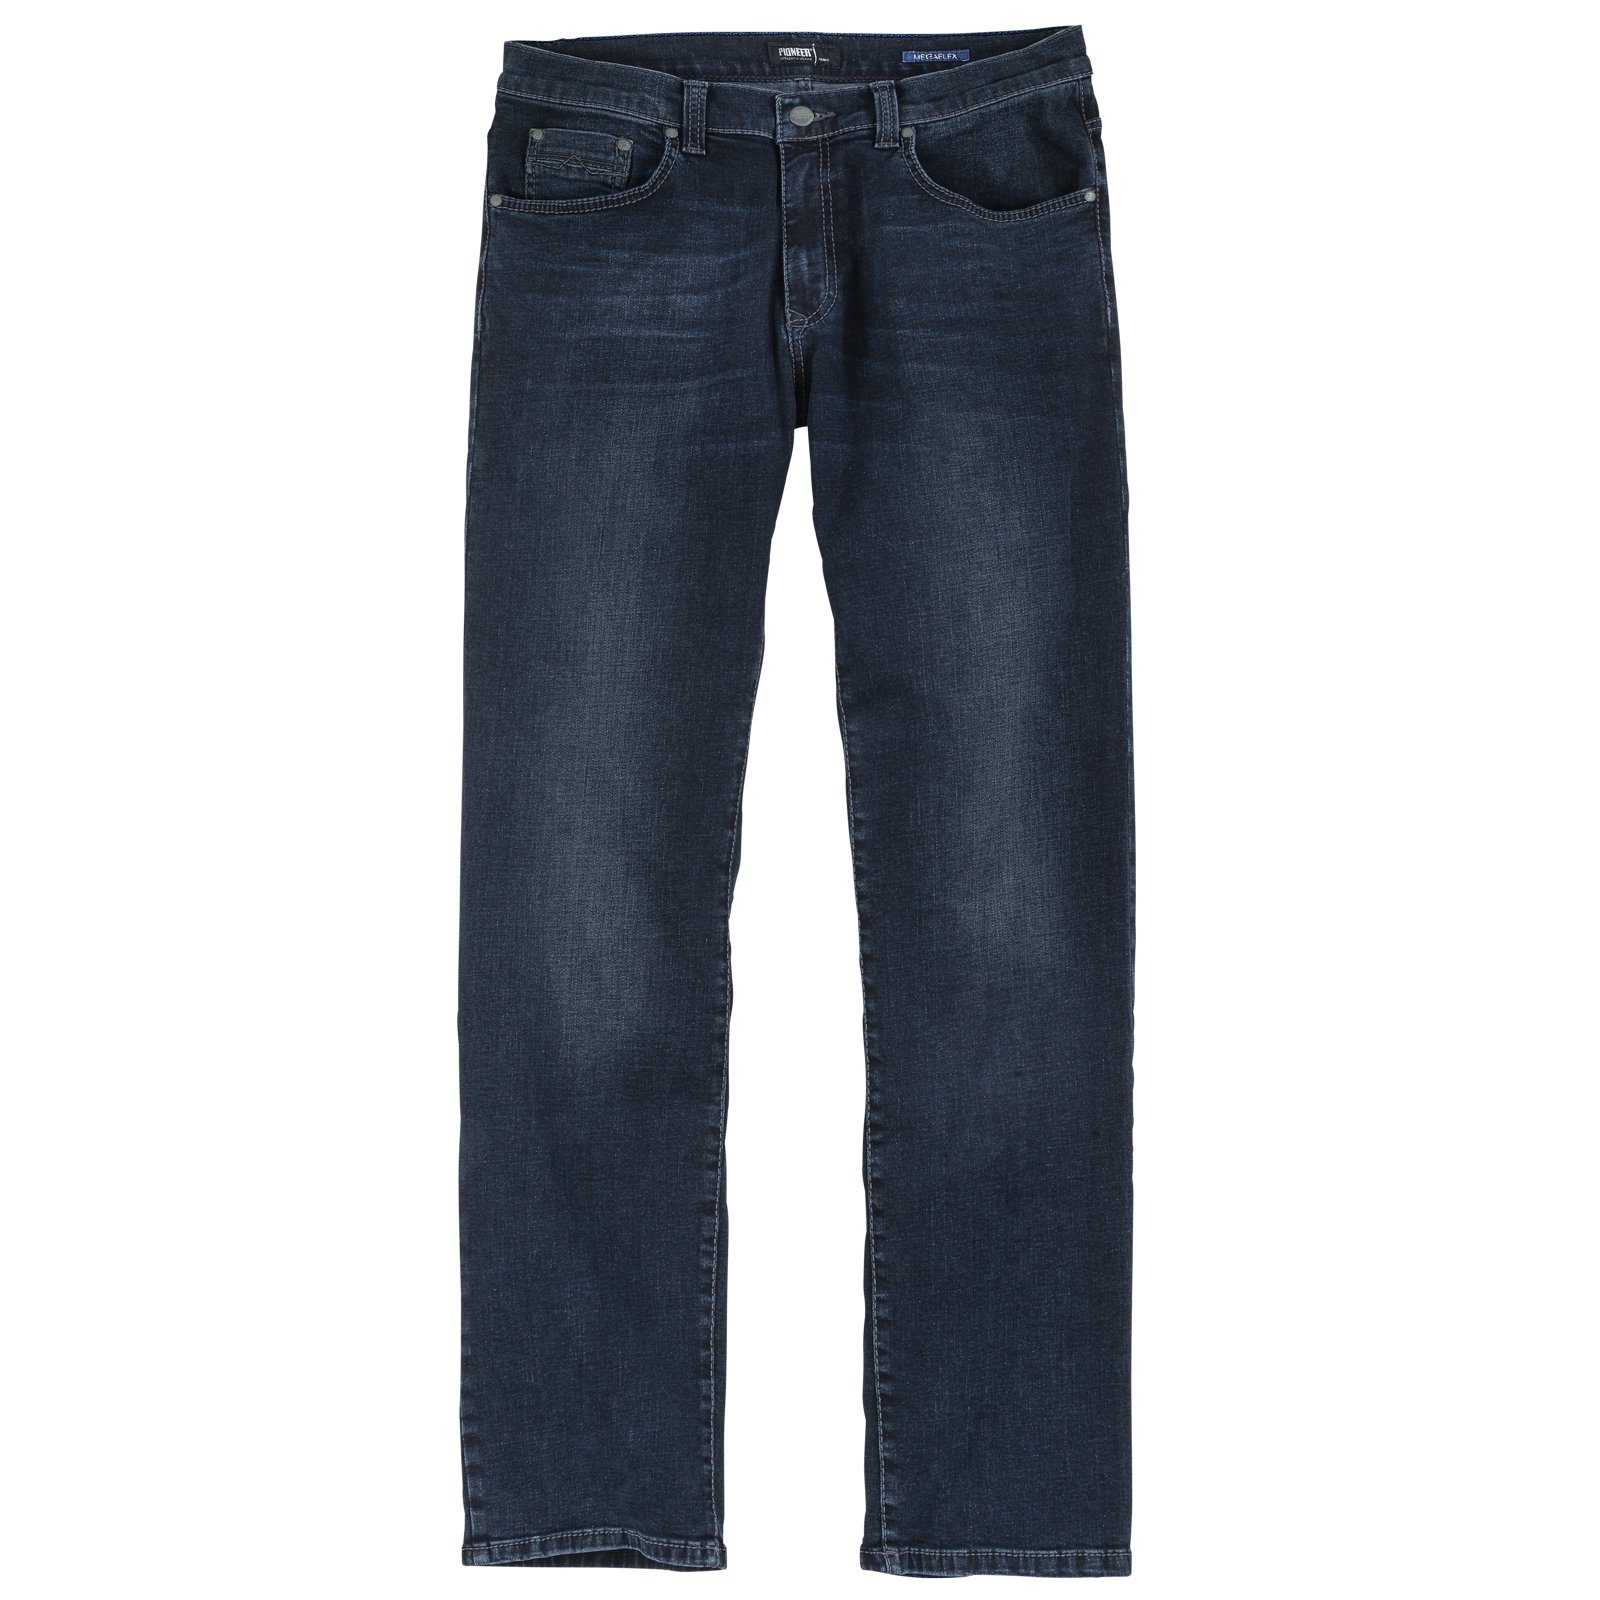 Pionier Bequeme buffies Rando blue/black Stretch-Jeans Jeans Größen Pioneer used Große